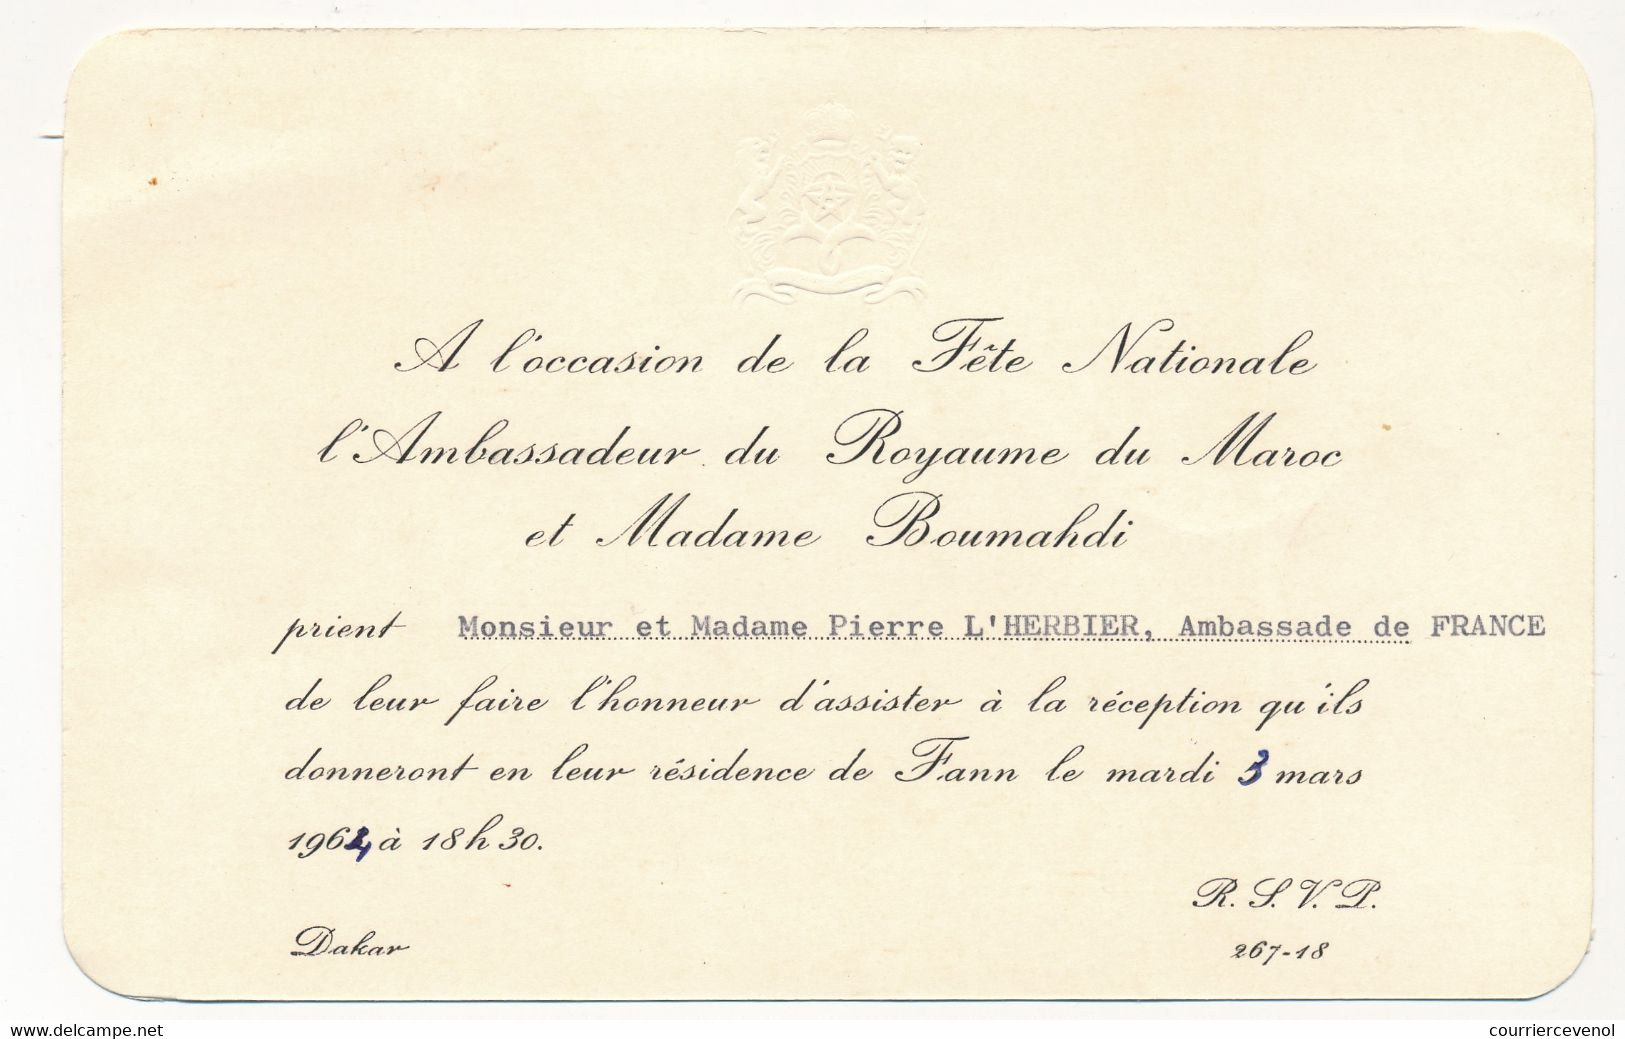 SENEGAL / FRANCE - Invitation Fête Nationale Du MAROC - Ambassadeur Bouhmadi => Réception Ambassade De France 1964 - Unclassified